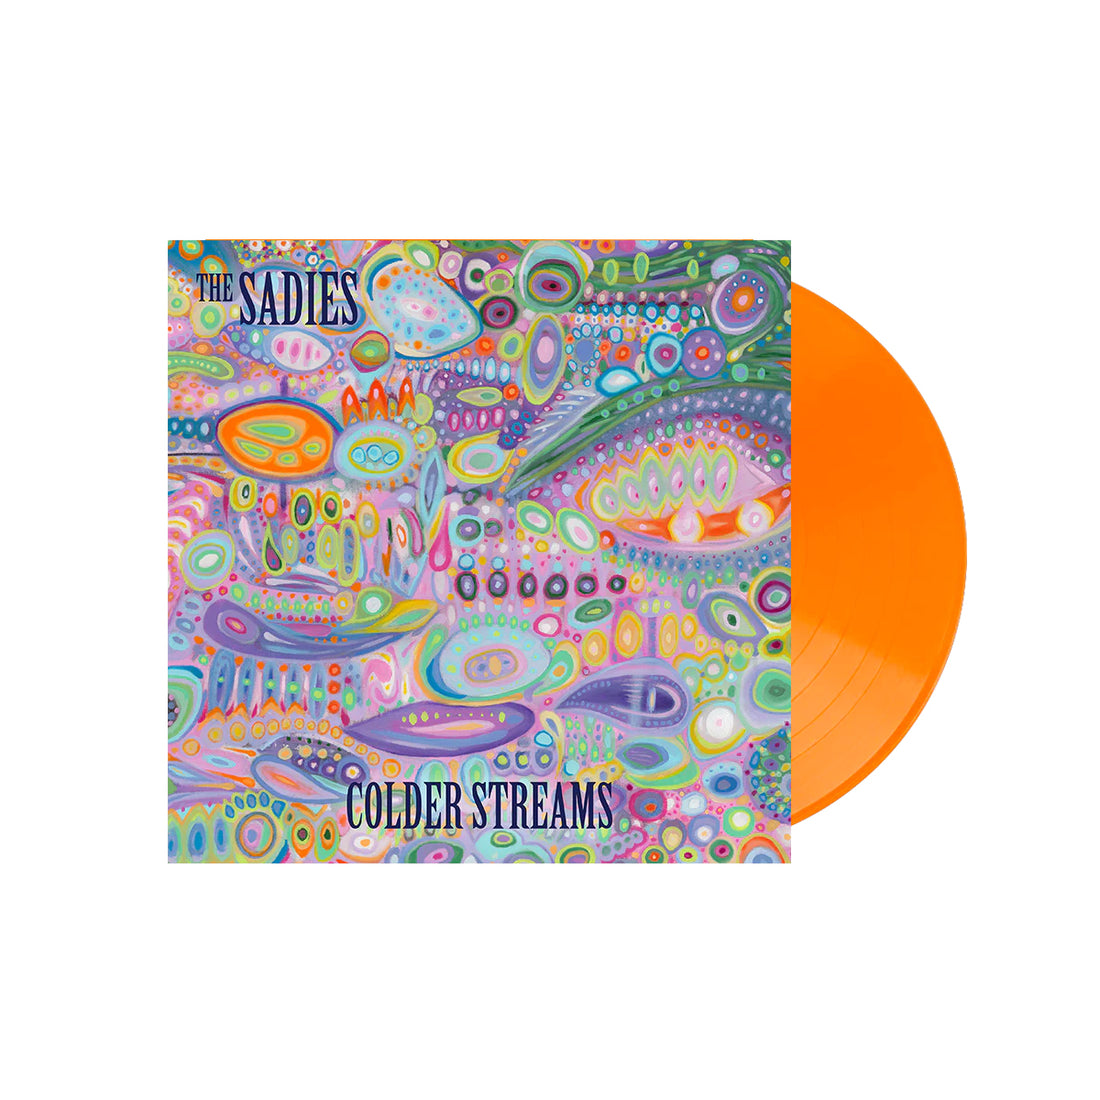 The Sadies - Colder Streams - LP - Orange Vinyl